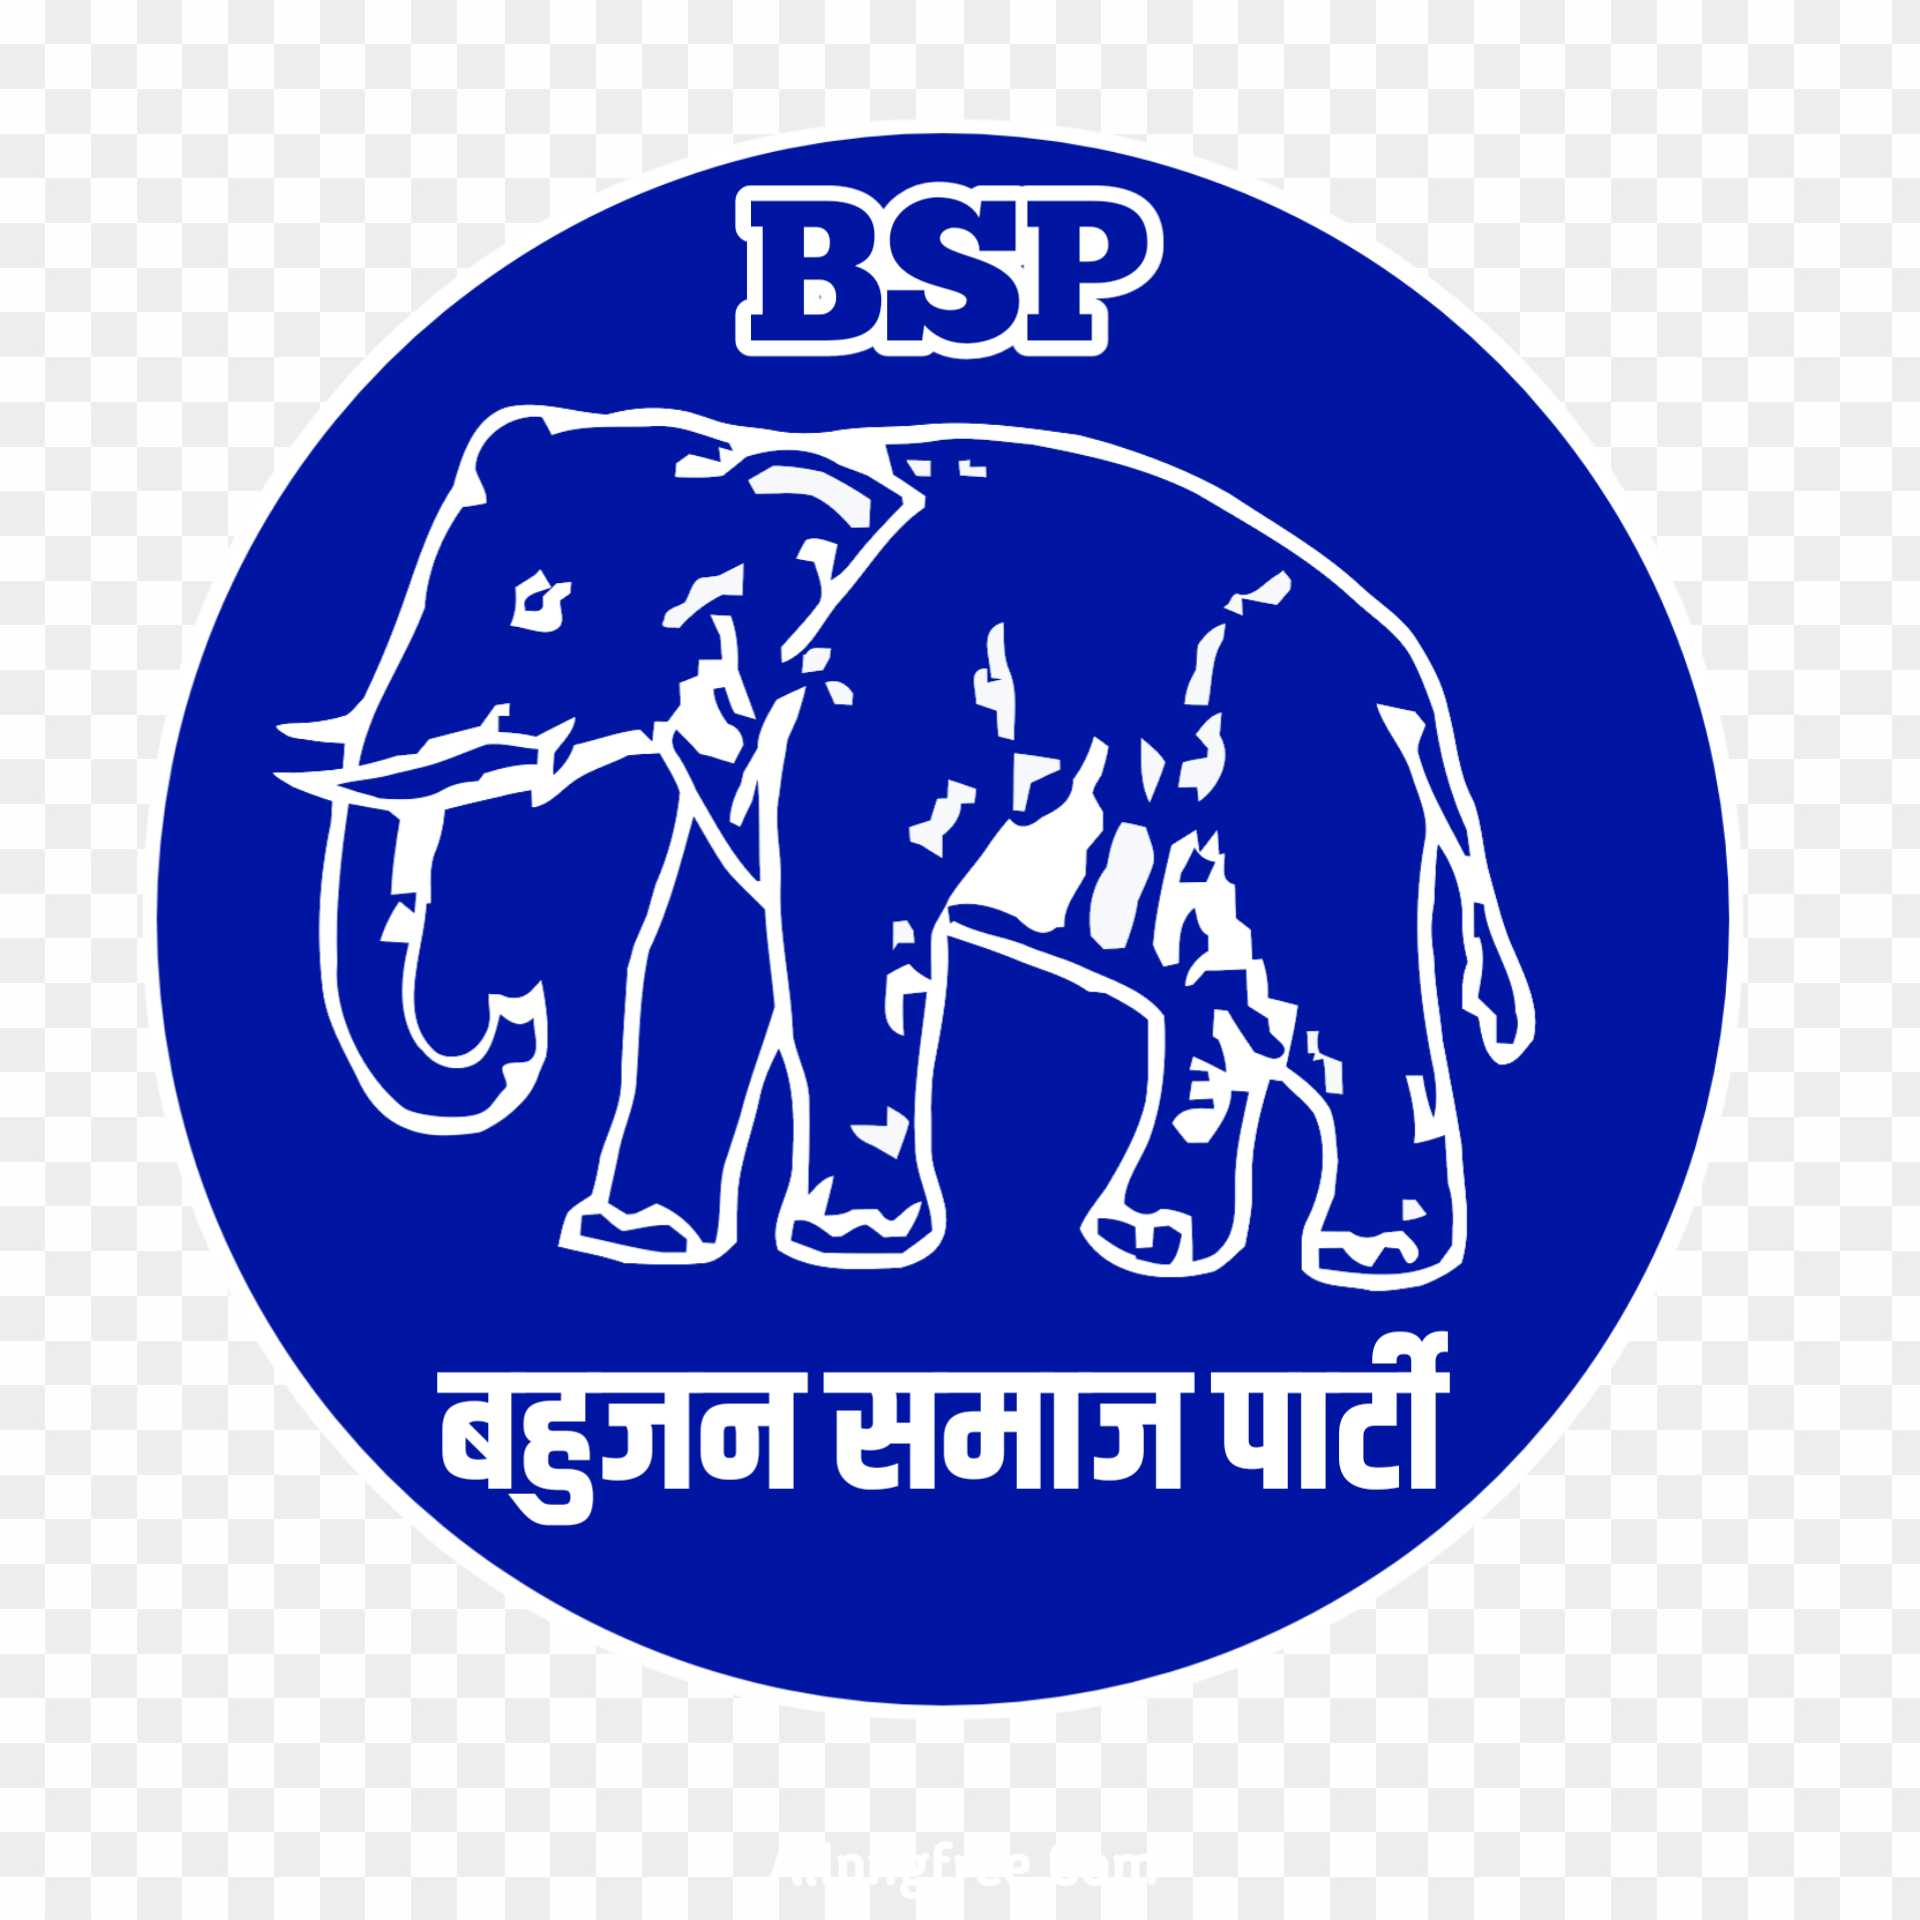 Bsp logo png images 